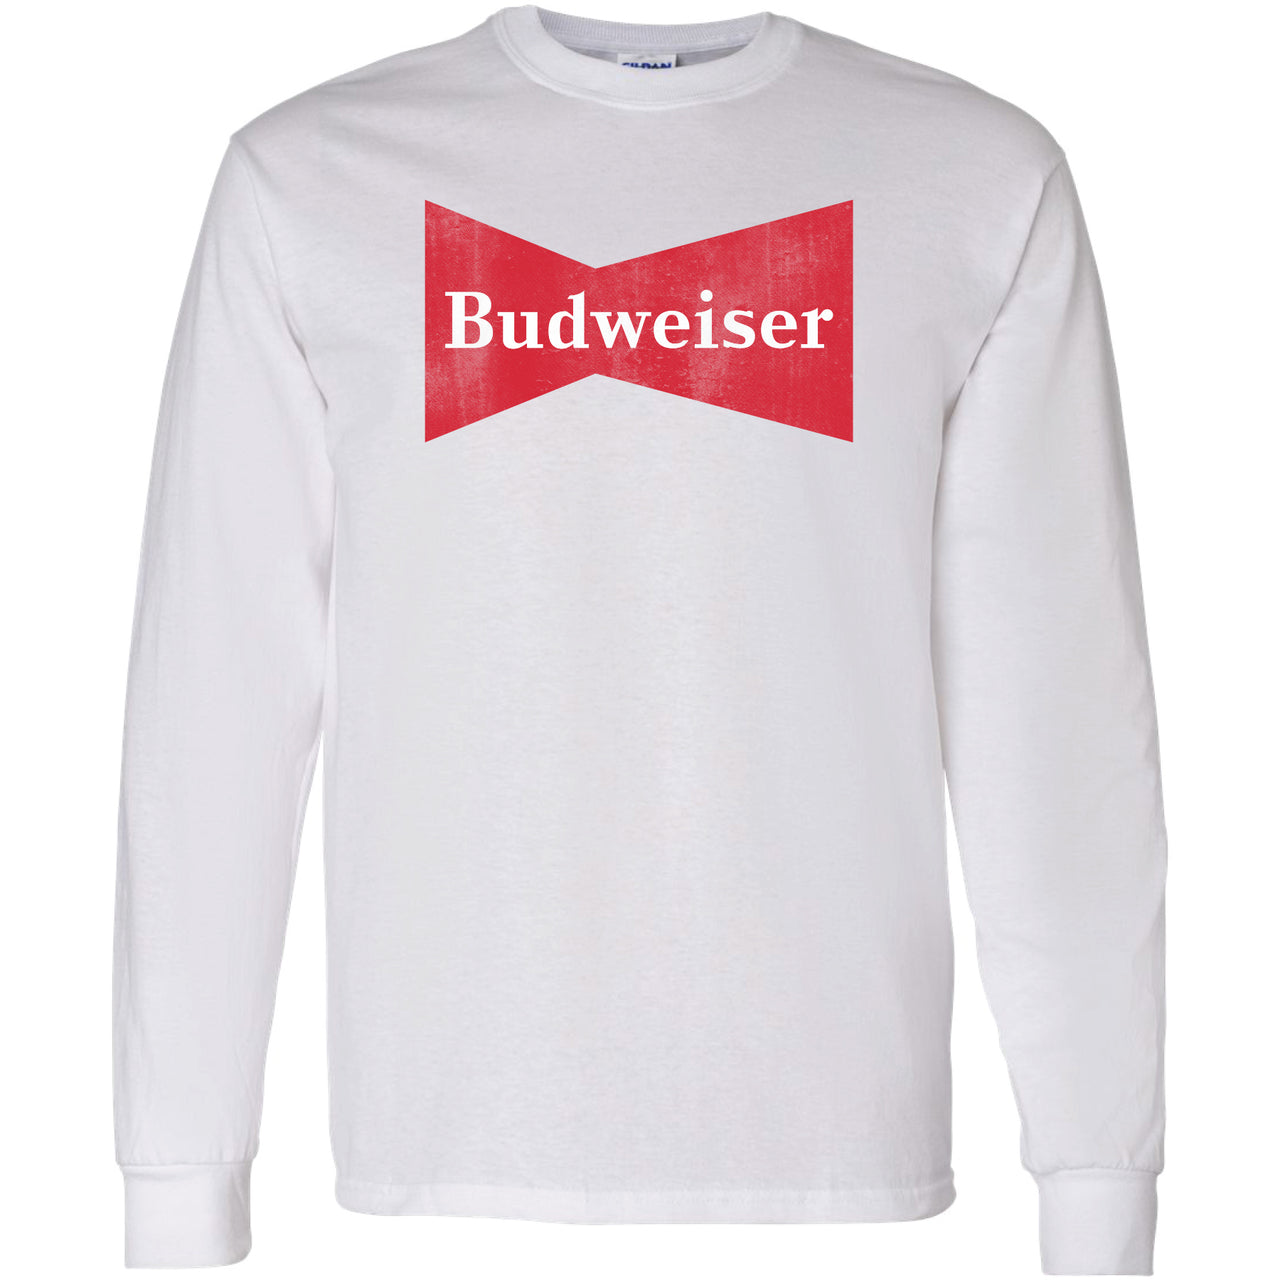 Budweiser - Vintage Bow Tie Logo Long Sleeve T-Shirt